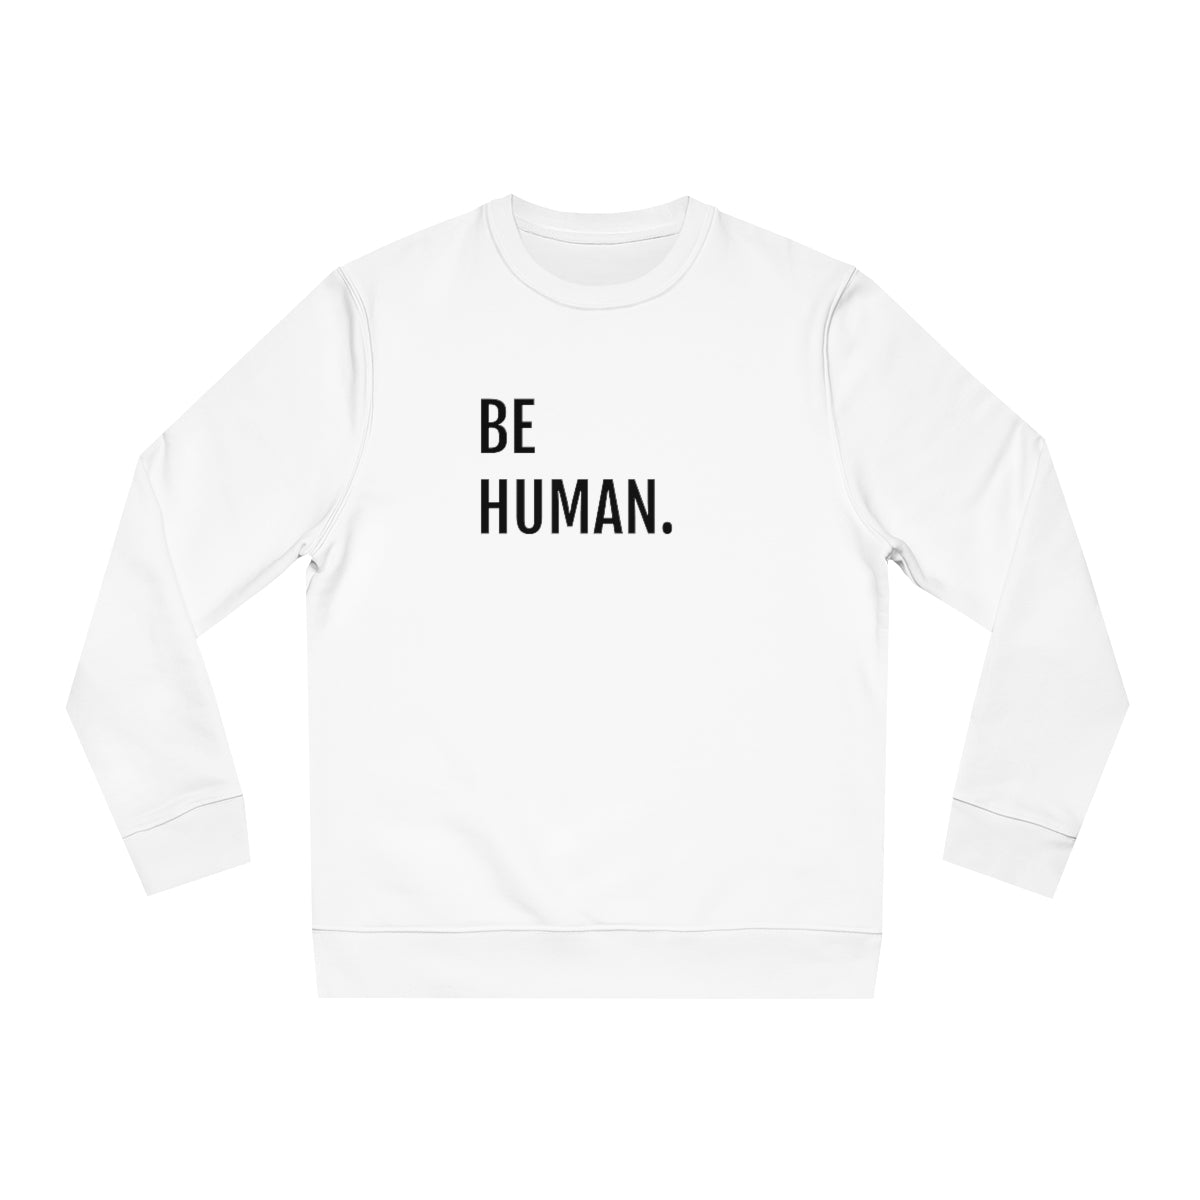 BE HUMAN. - Unisex Crewneck